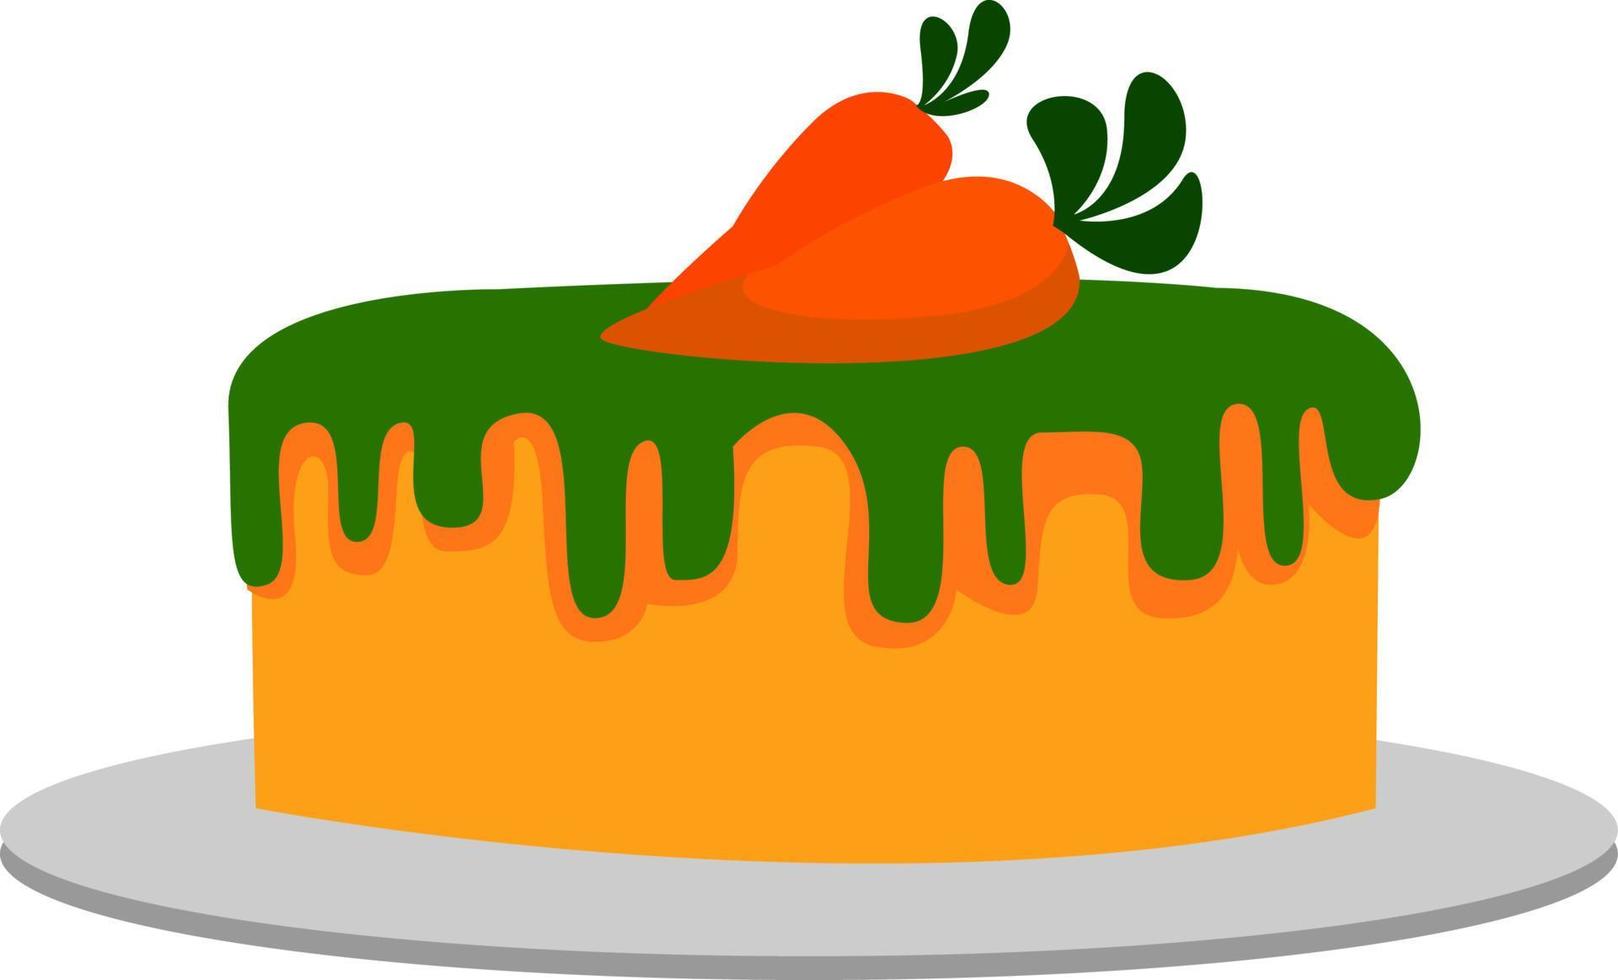 Tarta de zanahoria, ilustración, vector sobre fondo blanco.